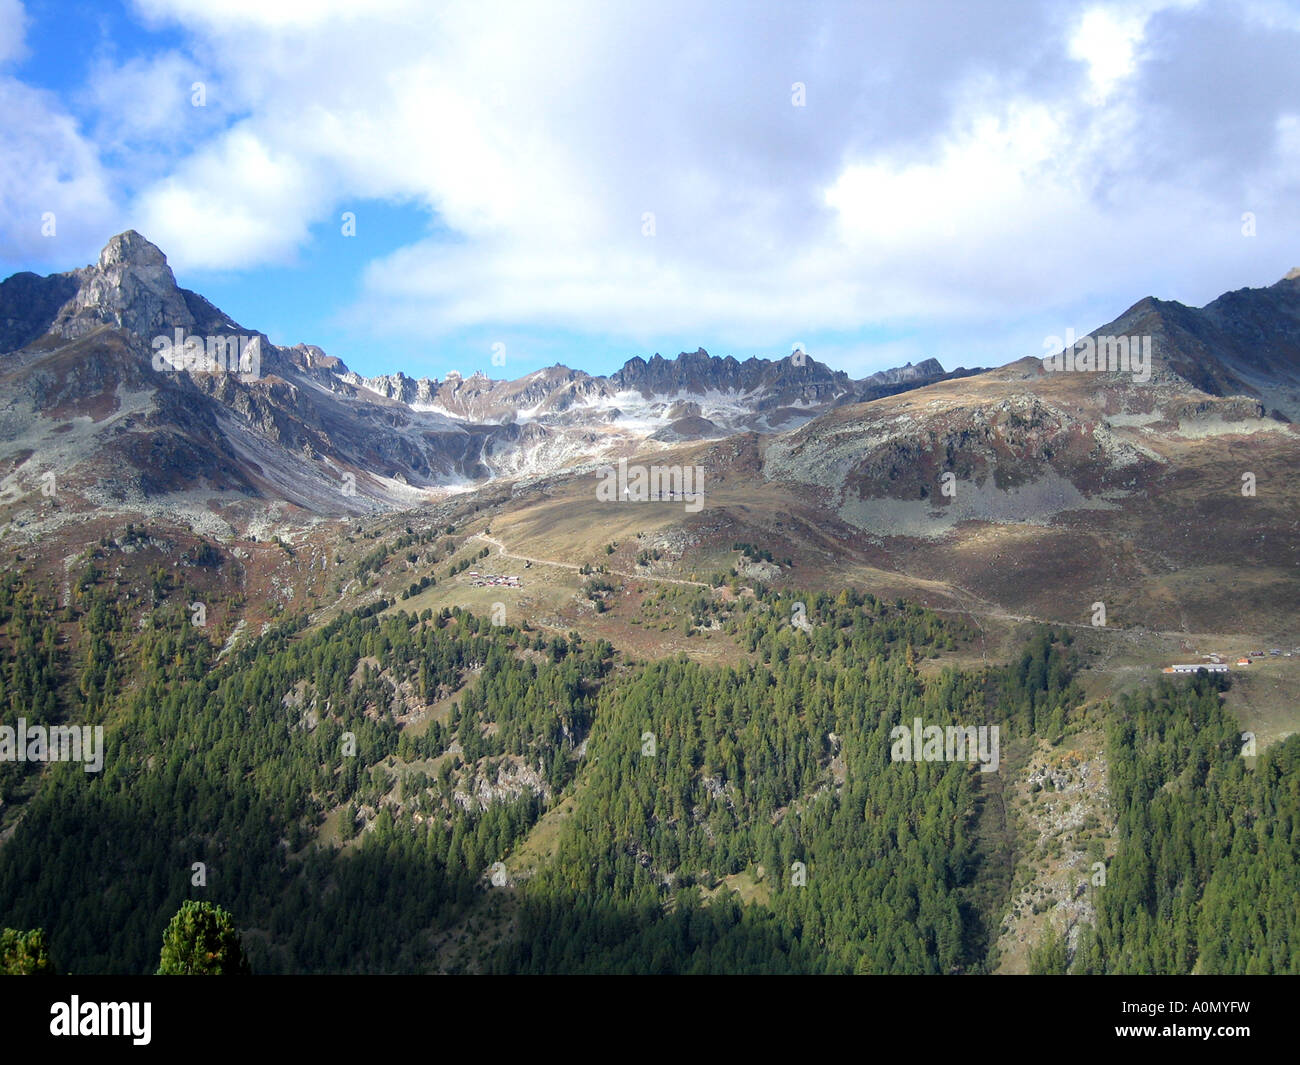 ALPINE scenery on the Walker's Haute Route trek from Chamonix, France to  Zermatt, Switzerland. Photo David Gale Stock Photo - Alamy